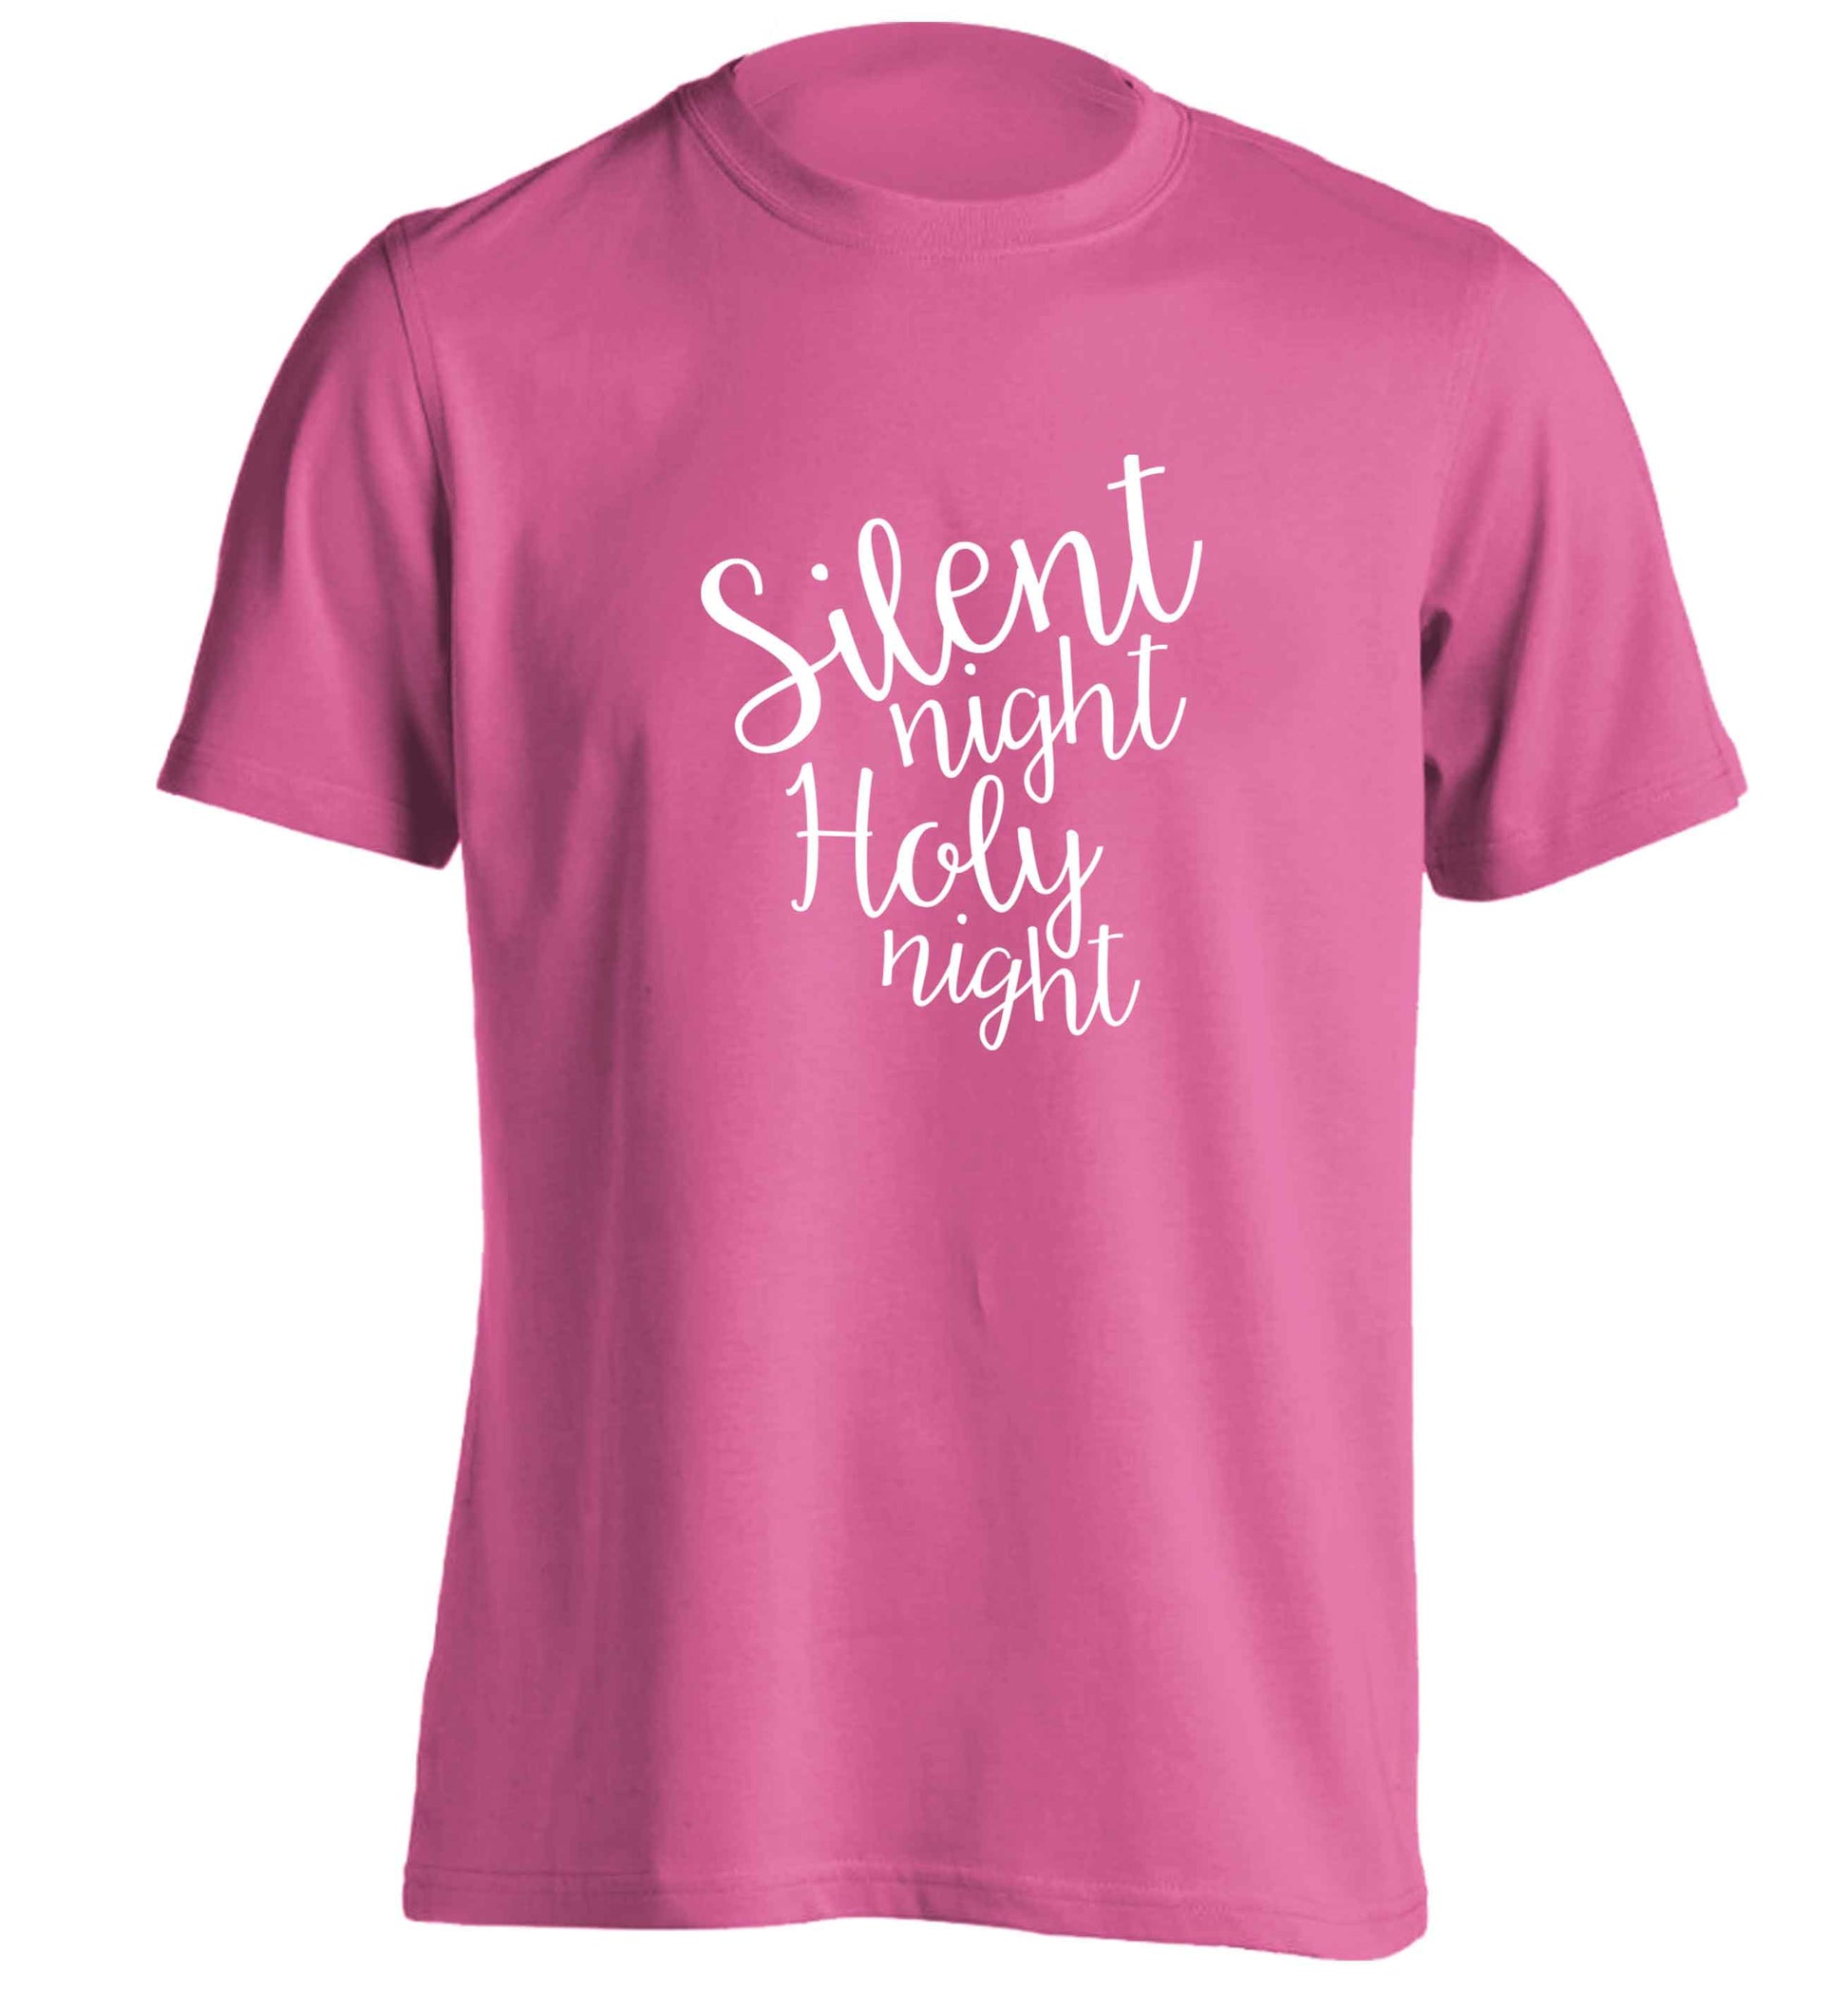 Silent night holy night adults unisex pink Tshirt 2XL